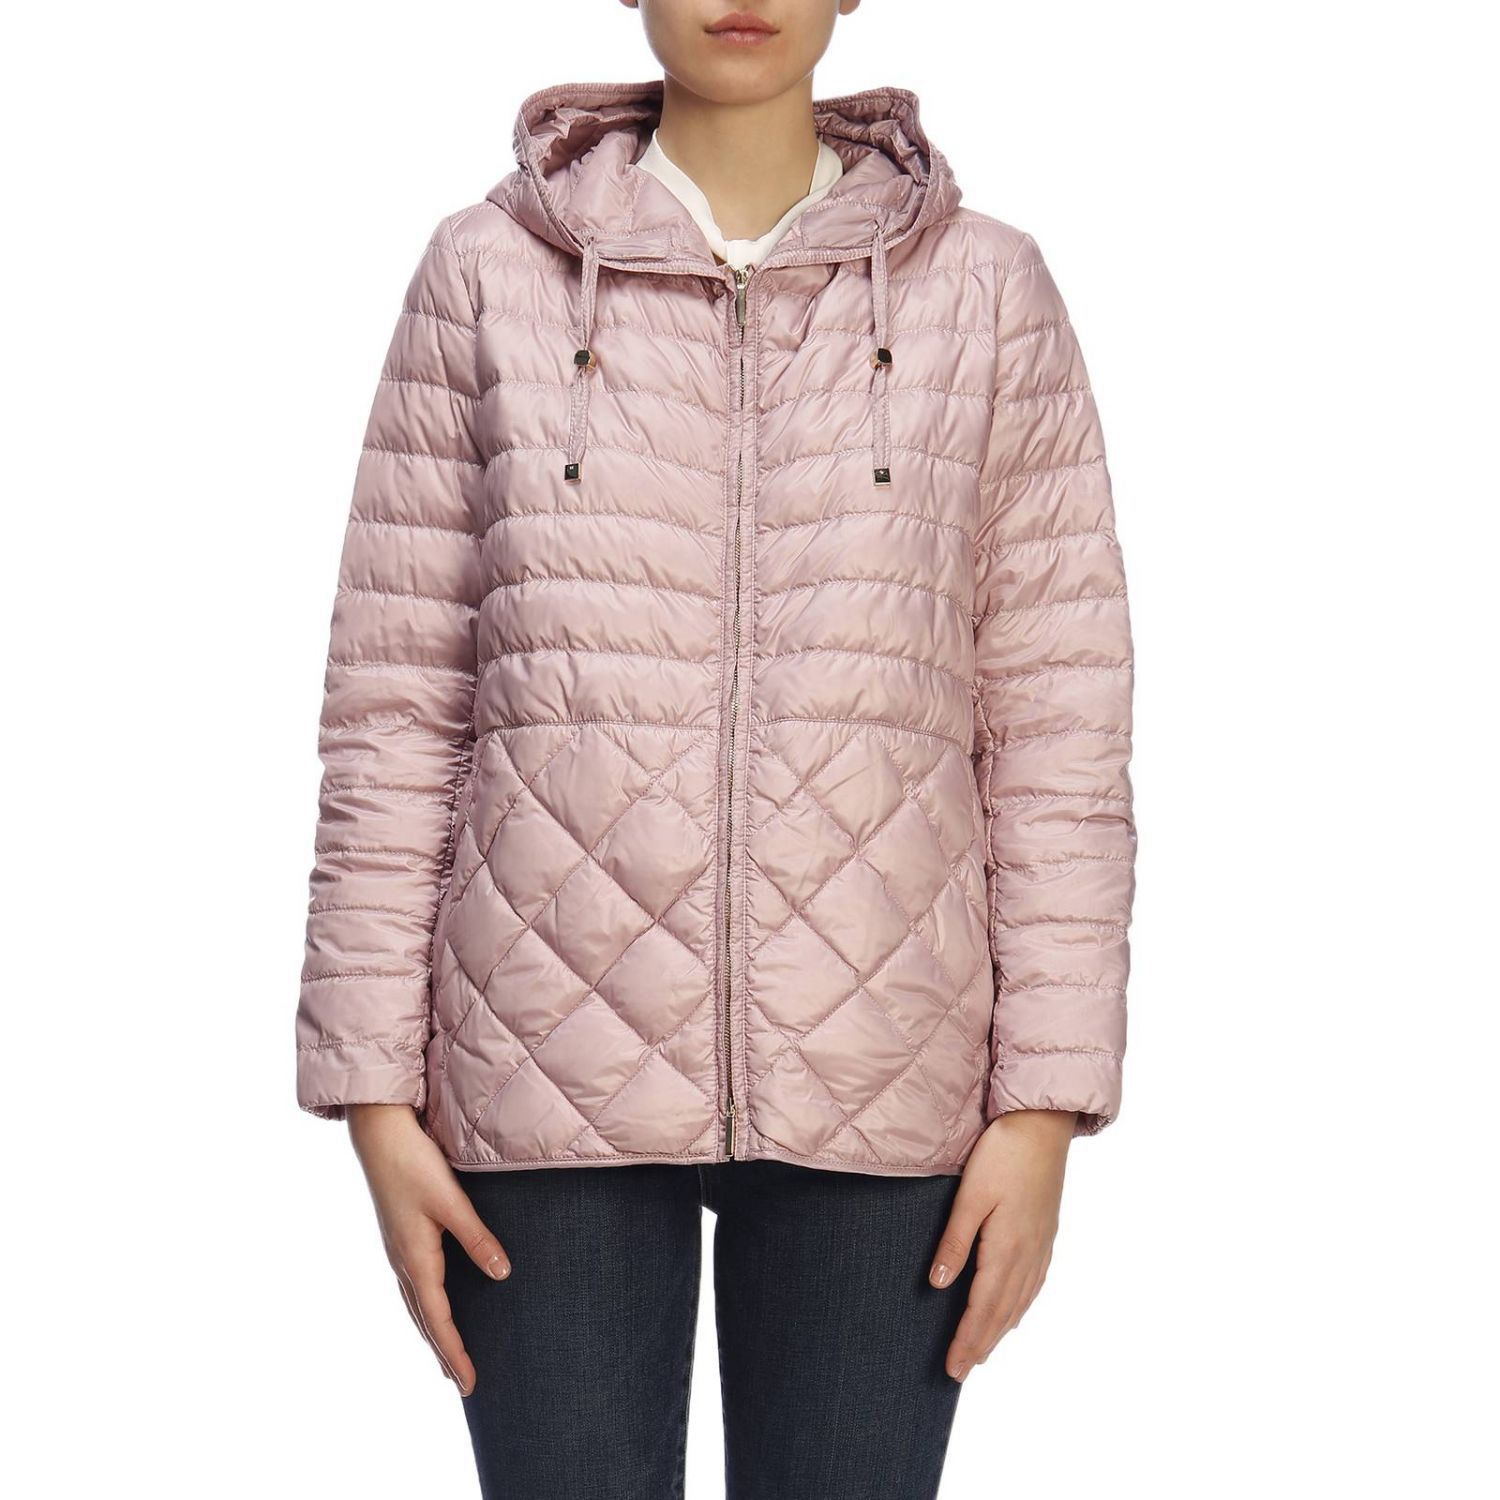 S Max Mara Outlet: Jacket women | Jacket S Max Mara Women Pink | Jacket ...